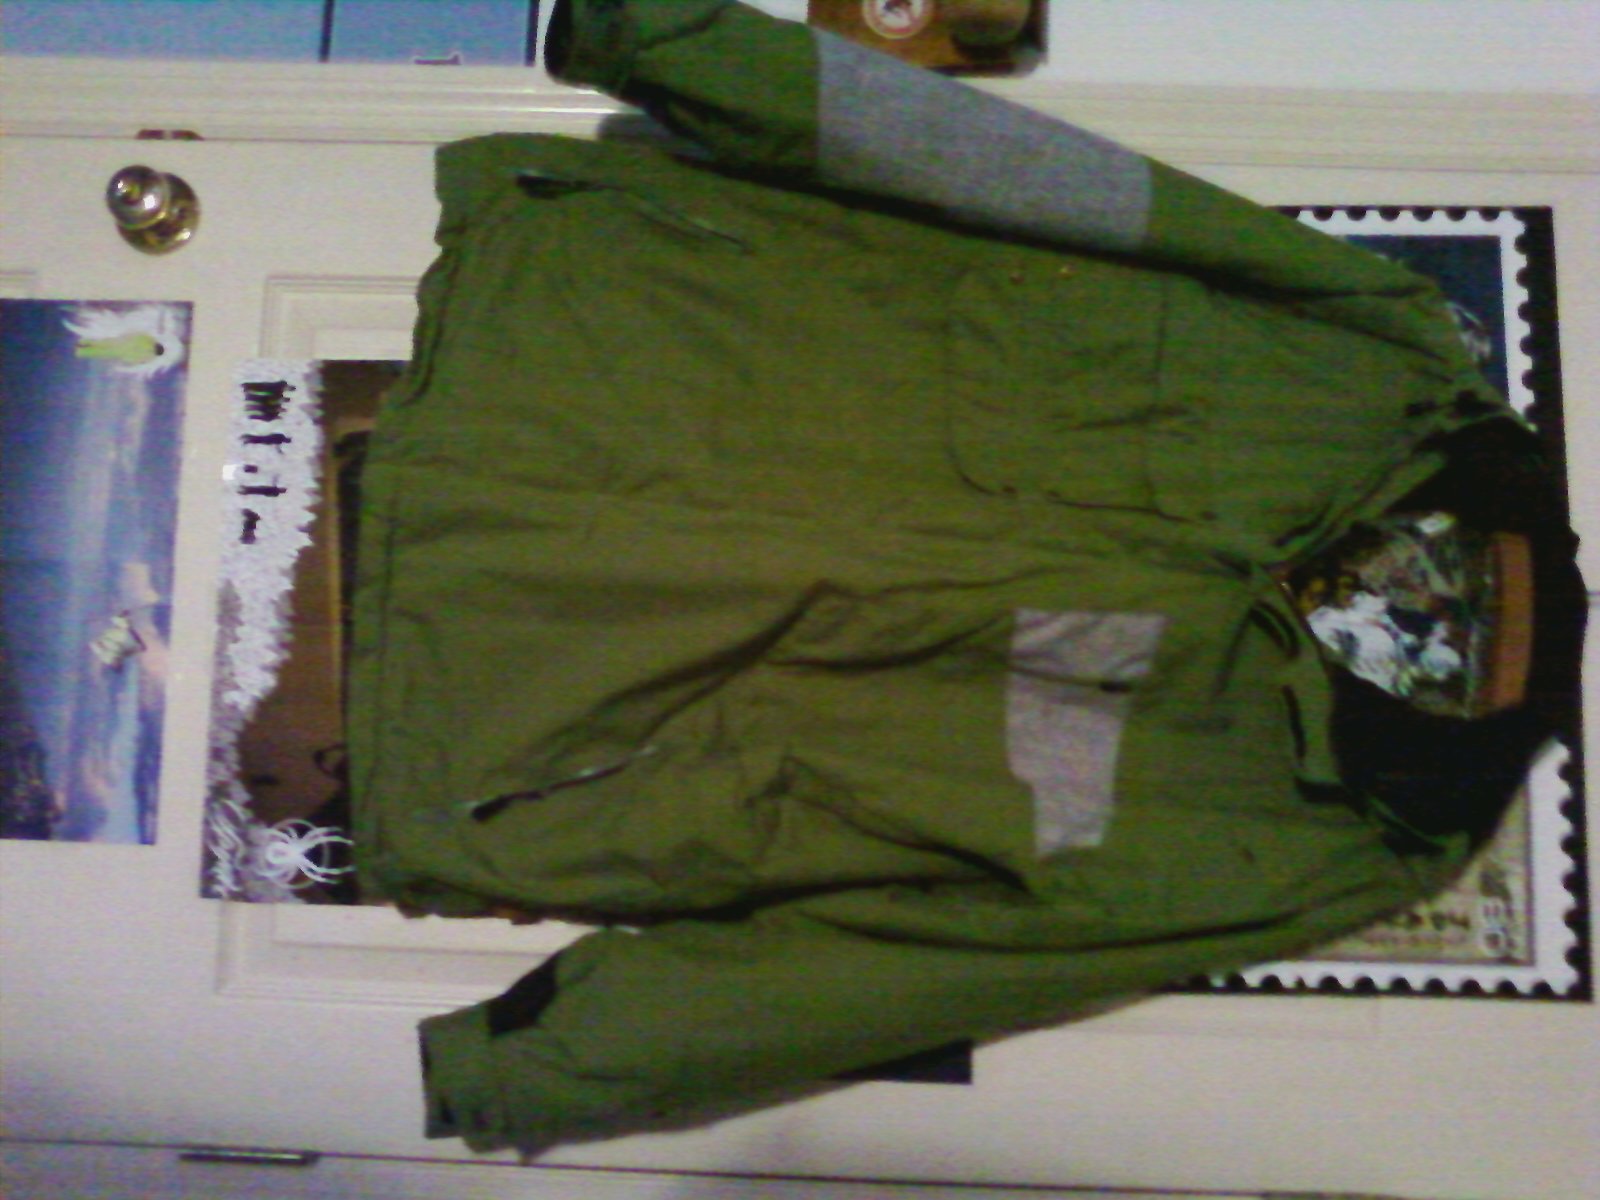 Obermyer jacket for sale